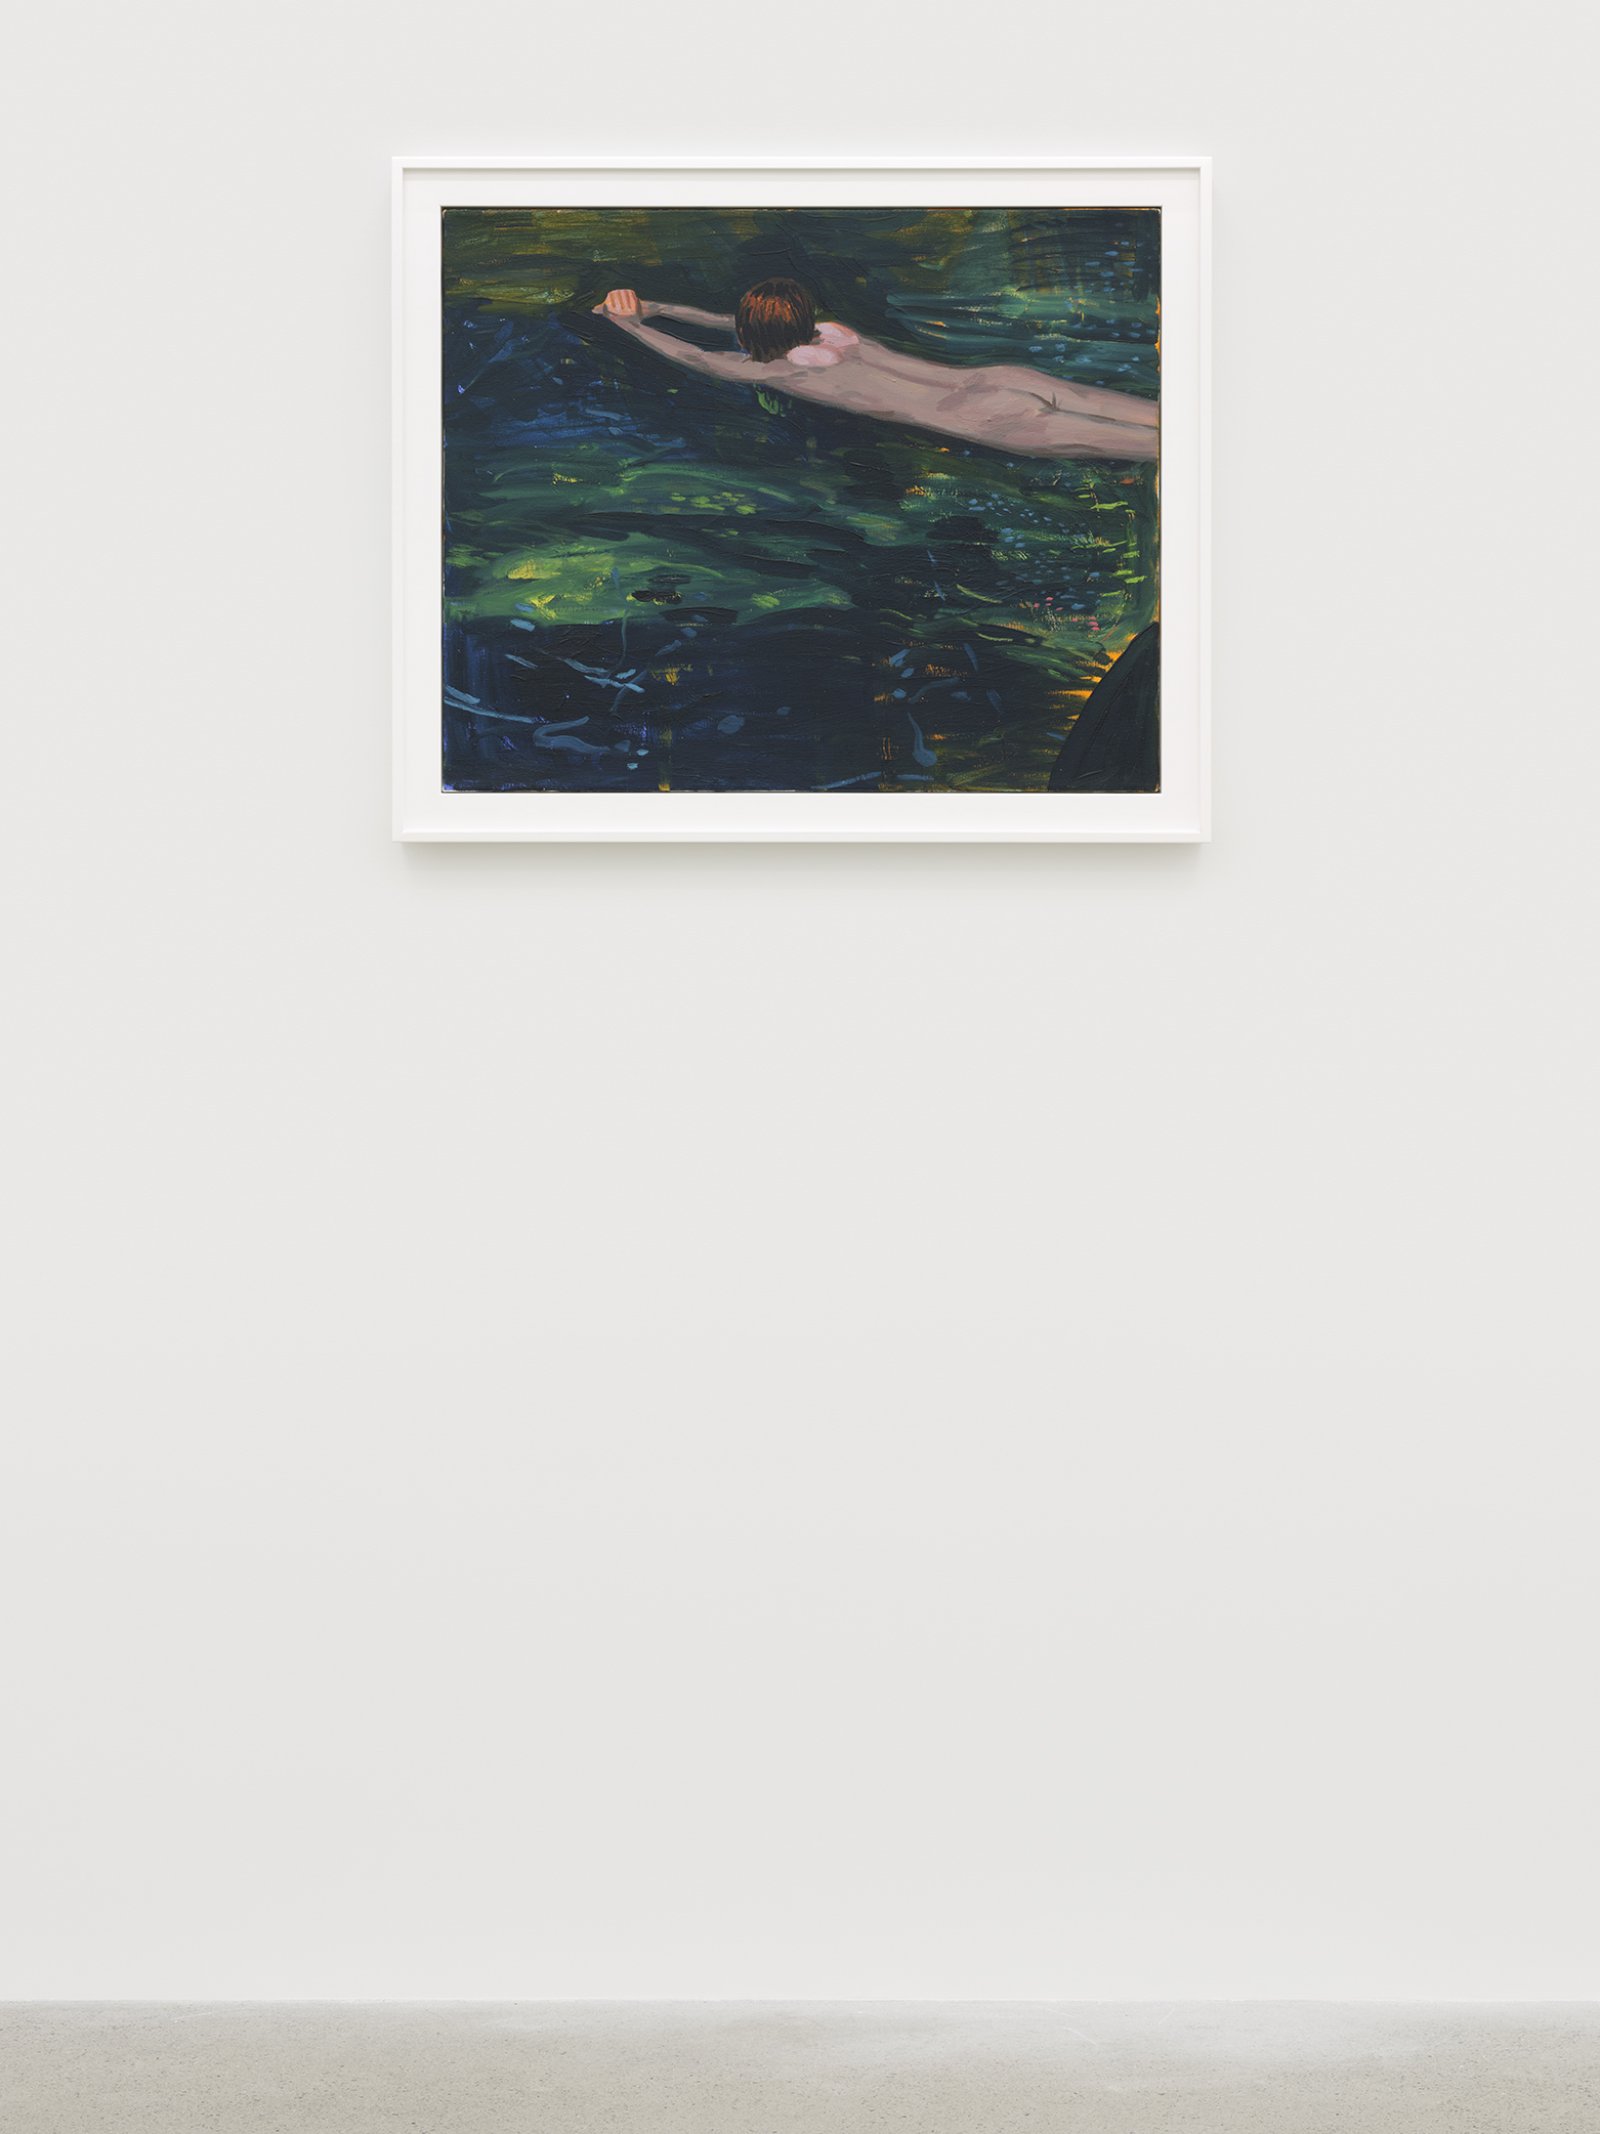 ​Damian Moppett, Untitled (Green Swimming), 2020, oil on canvas, 27 x 32 in. (69 x 82 cm) by Damian Moppett